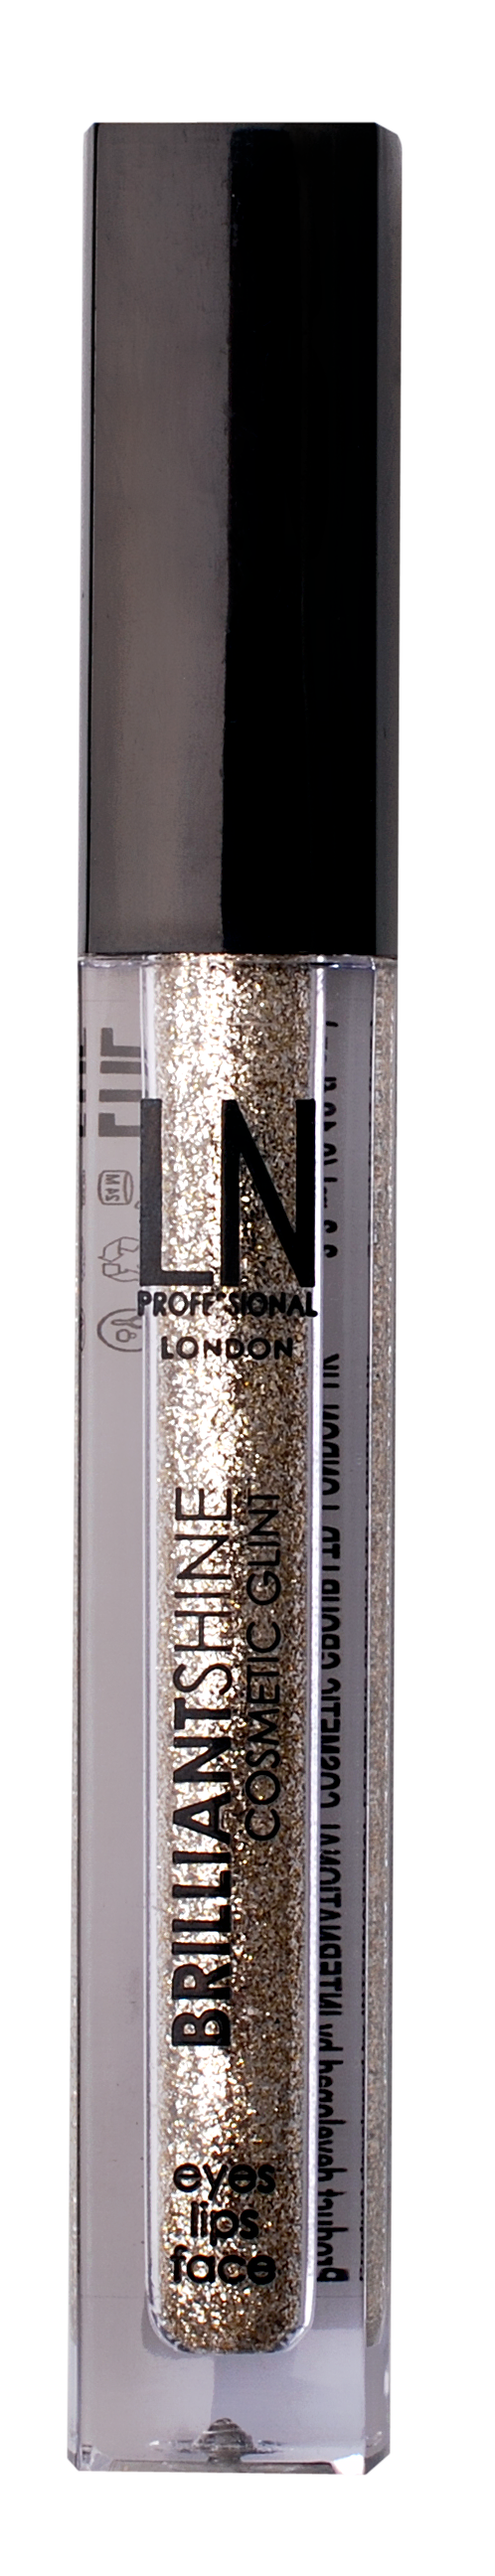 Жидкий глиттер для макияжа LN Professional Brilliantshine Cosmetic Glint, тон 04, 3,3 мл - фото 1